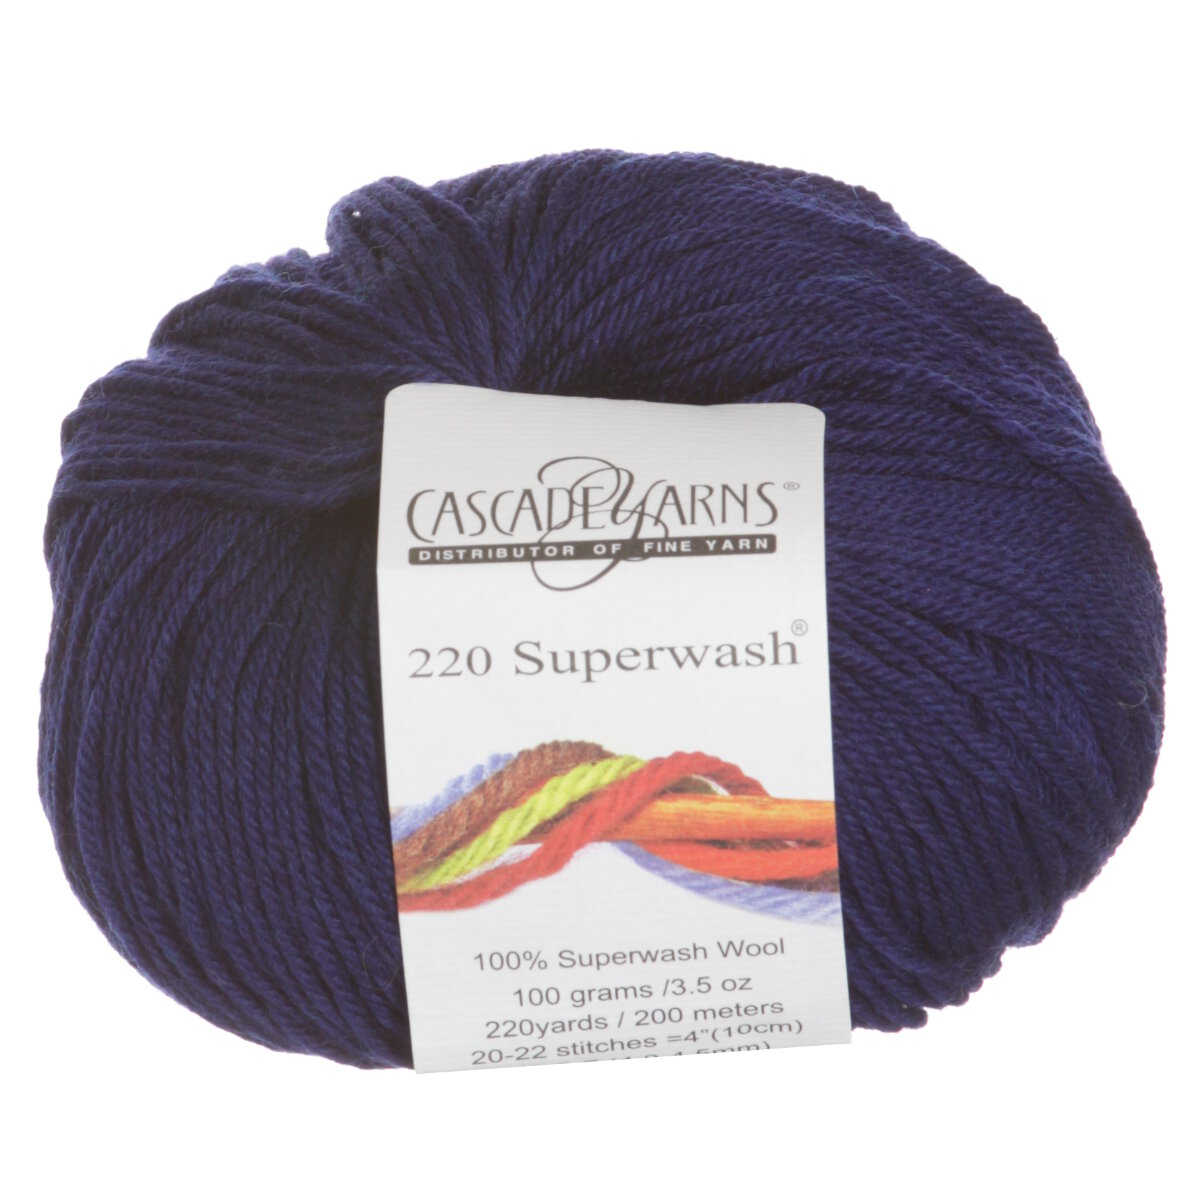 Cascade 220 Superwash Yarn - 1924 - Midnight Heather at Jimmy Beans Wool